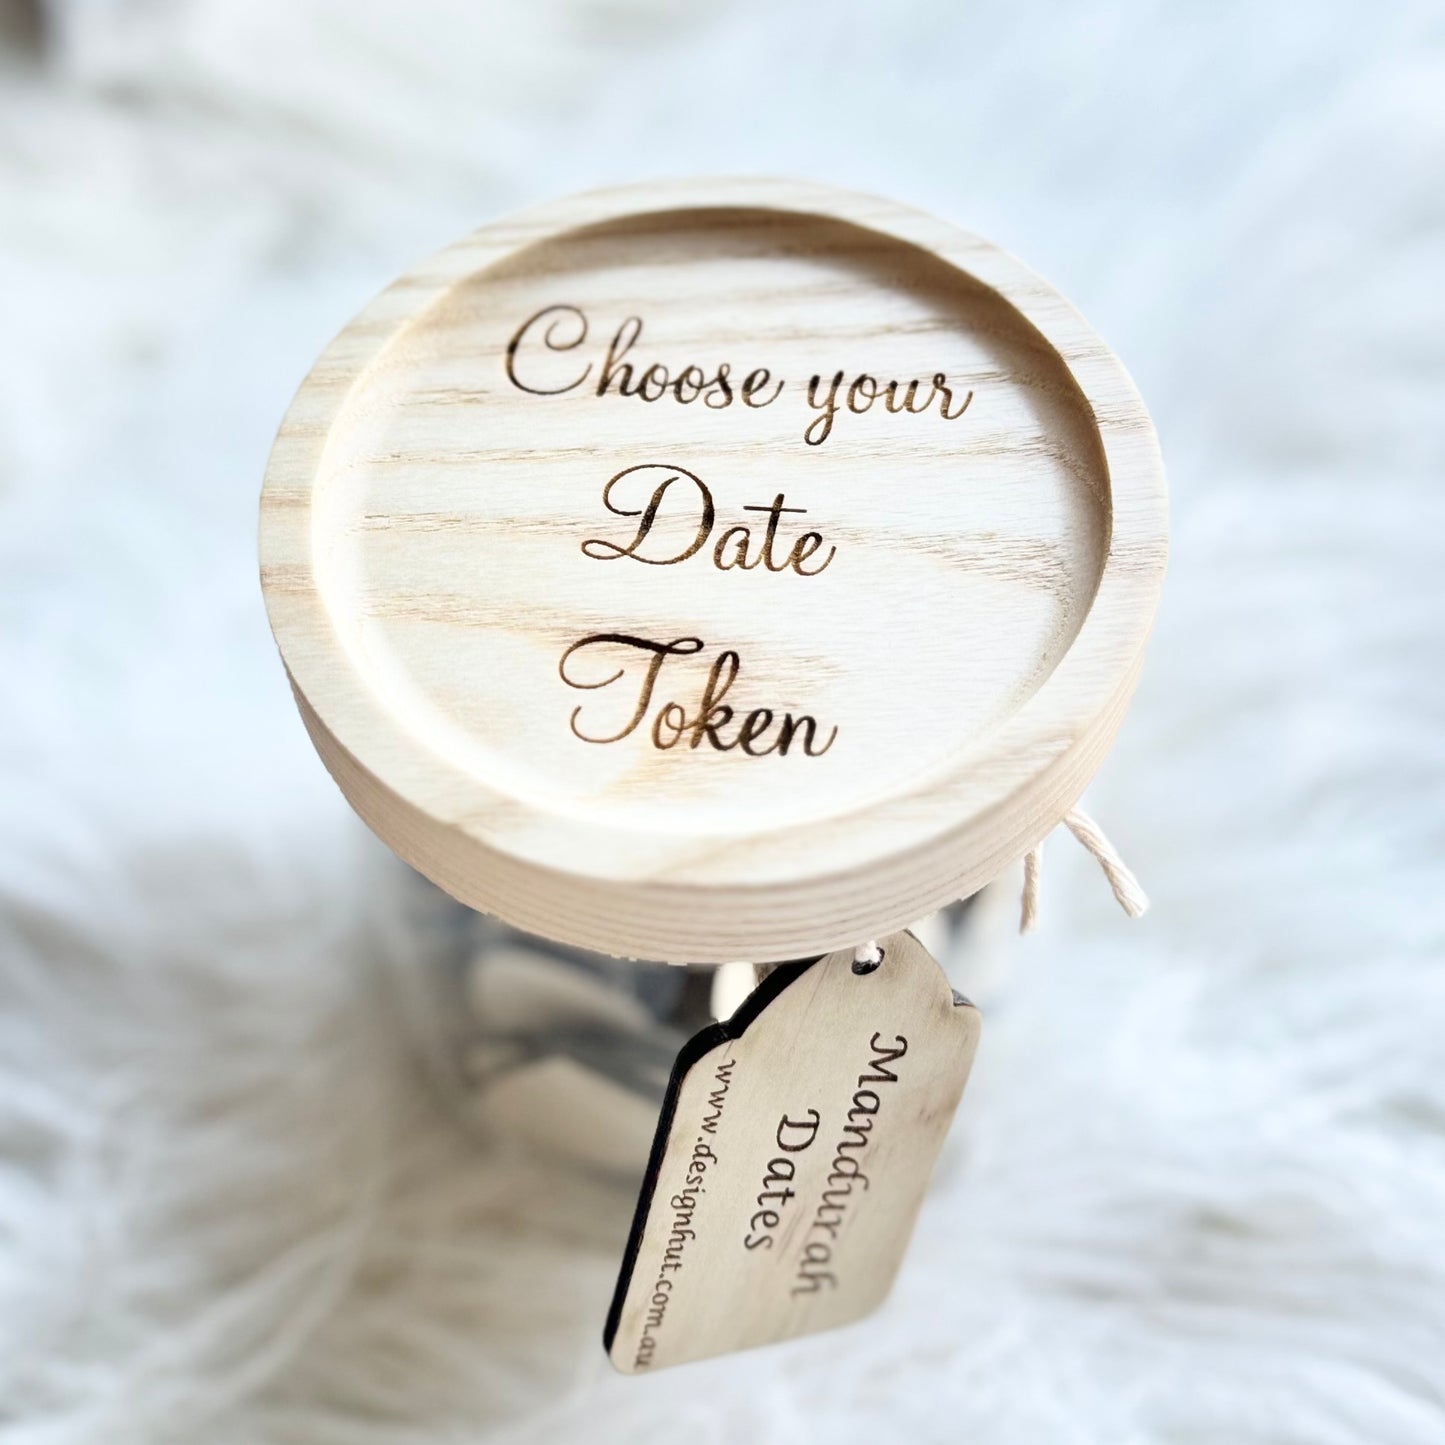 Date Night Jar - Choose your Date Token By Design Hut